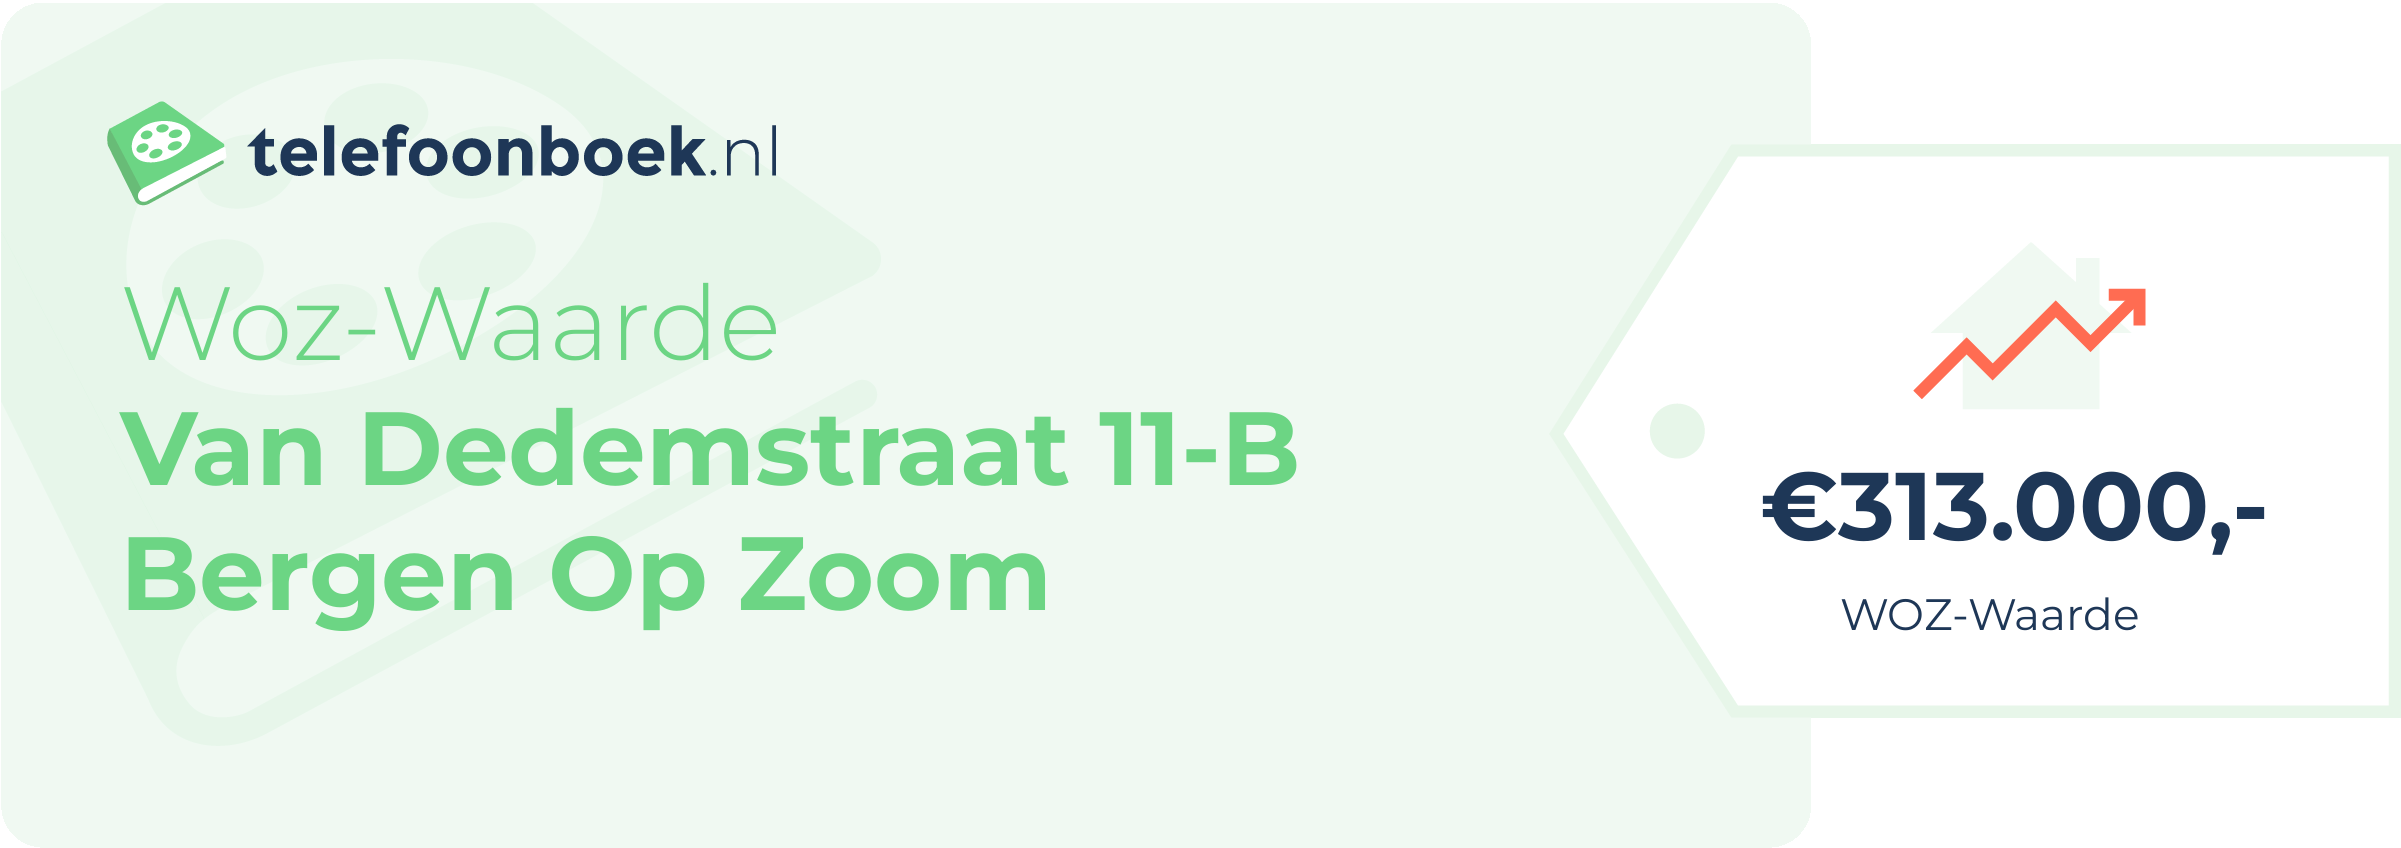 WOZ-waarde Van Dedemstraat 11-B Bergen Op Zoom